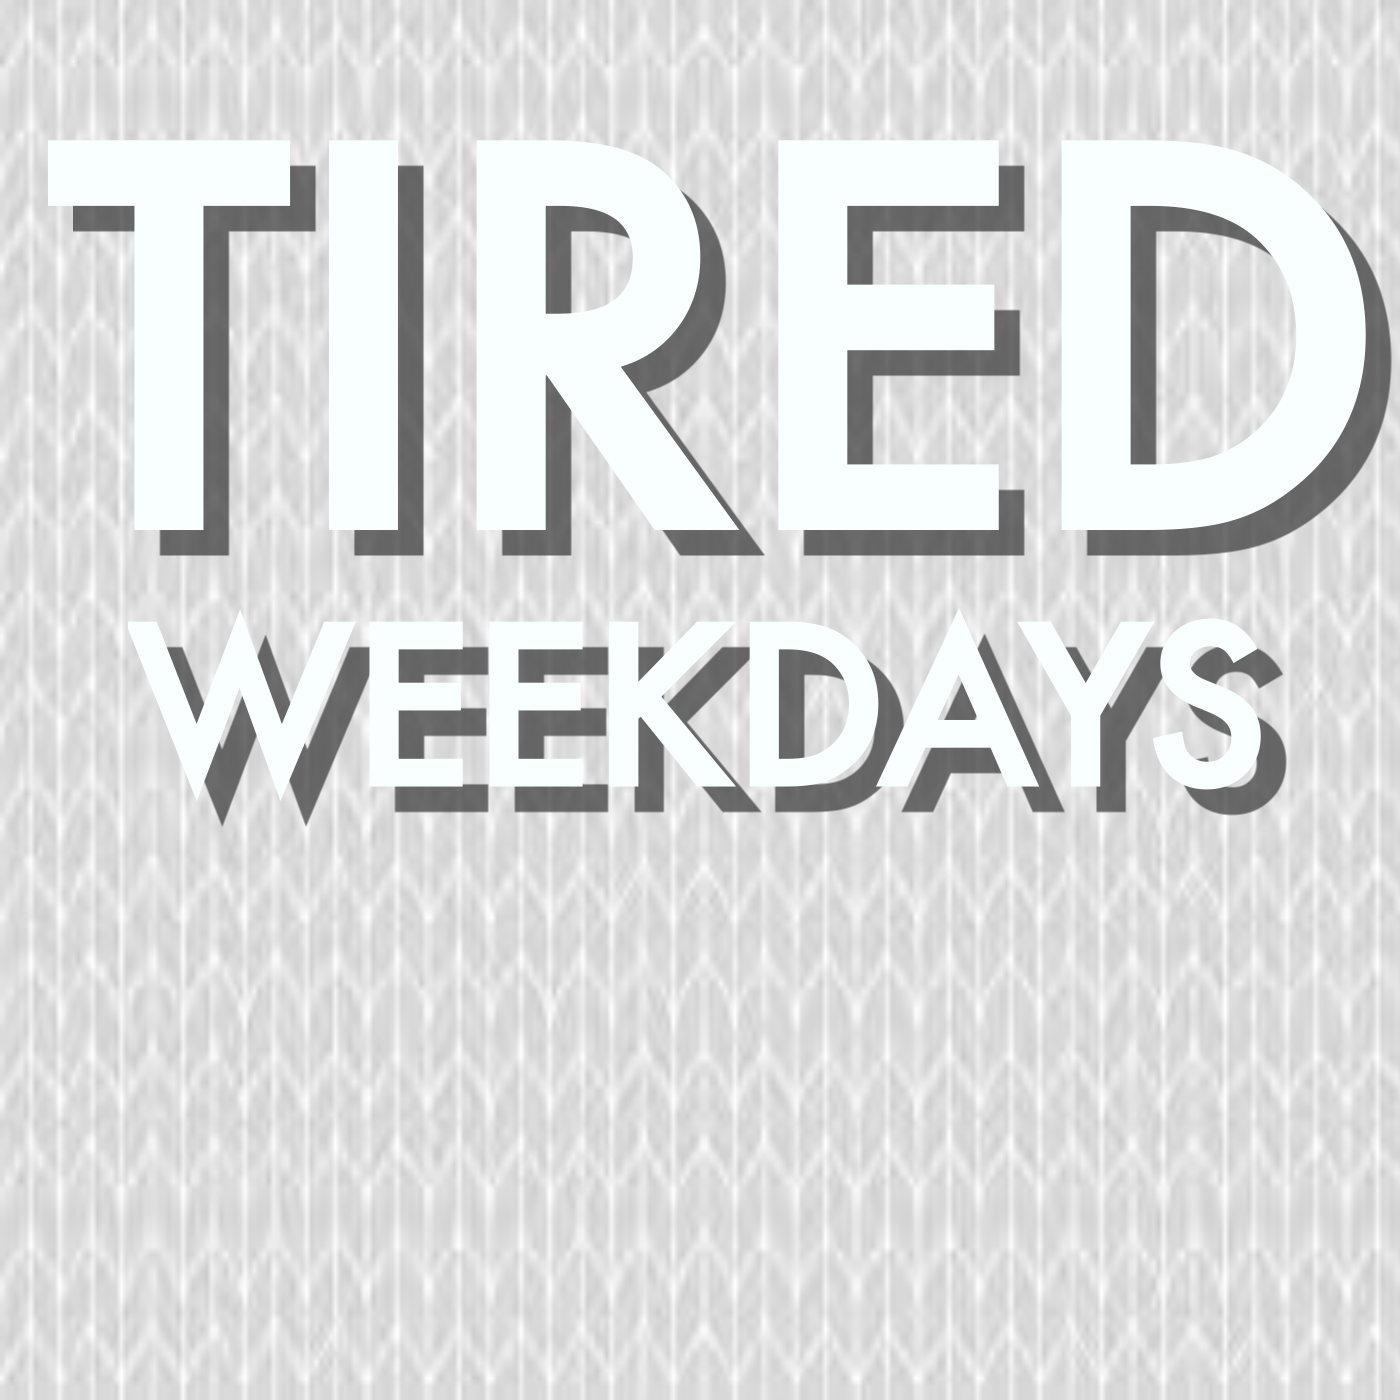 Tired Weekdays